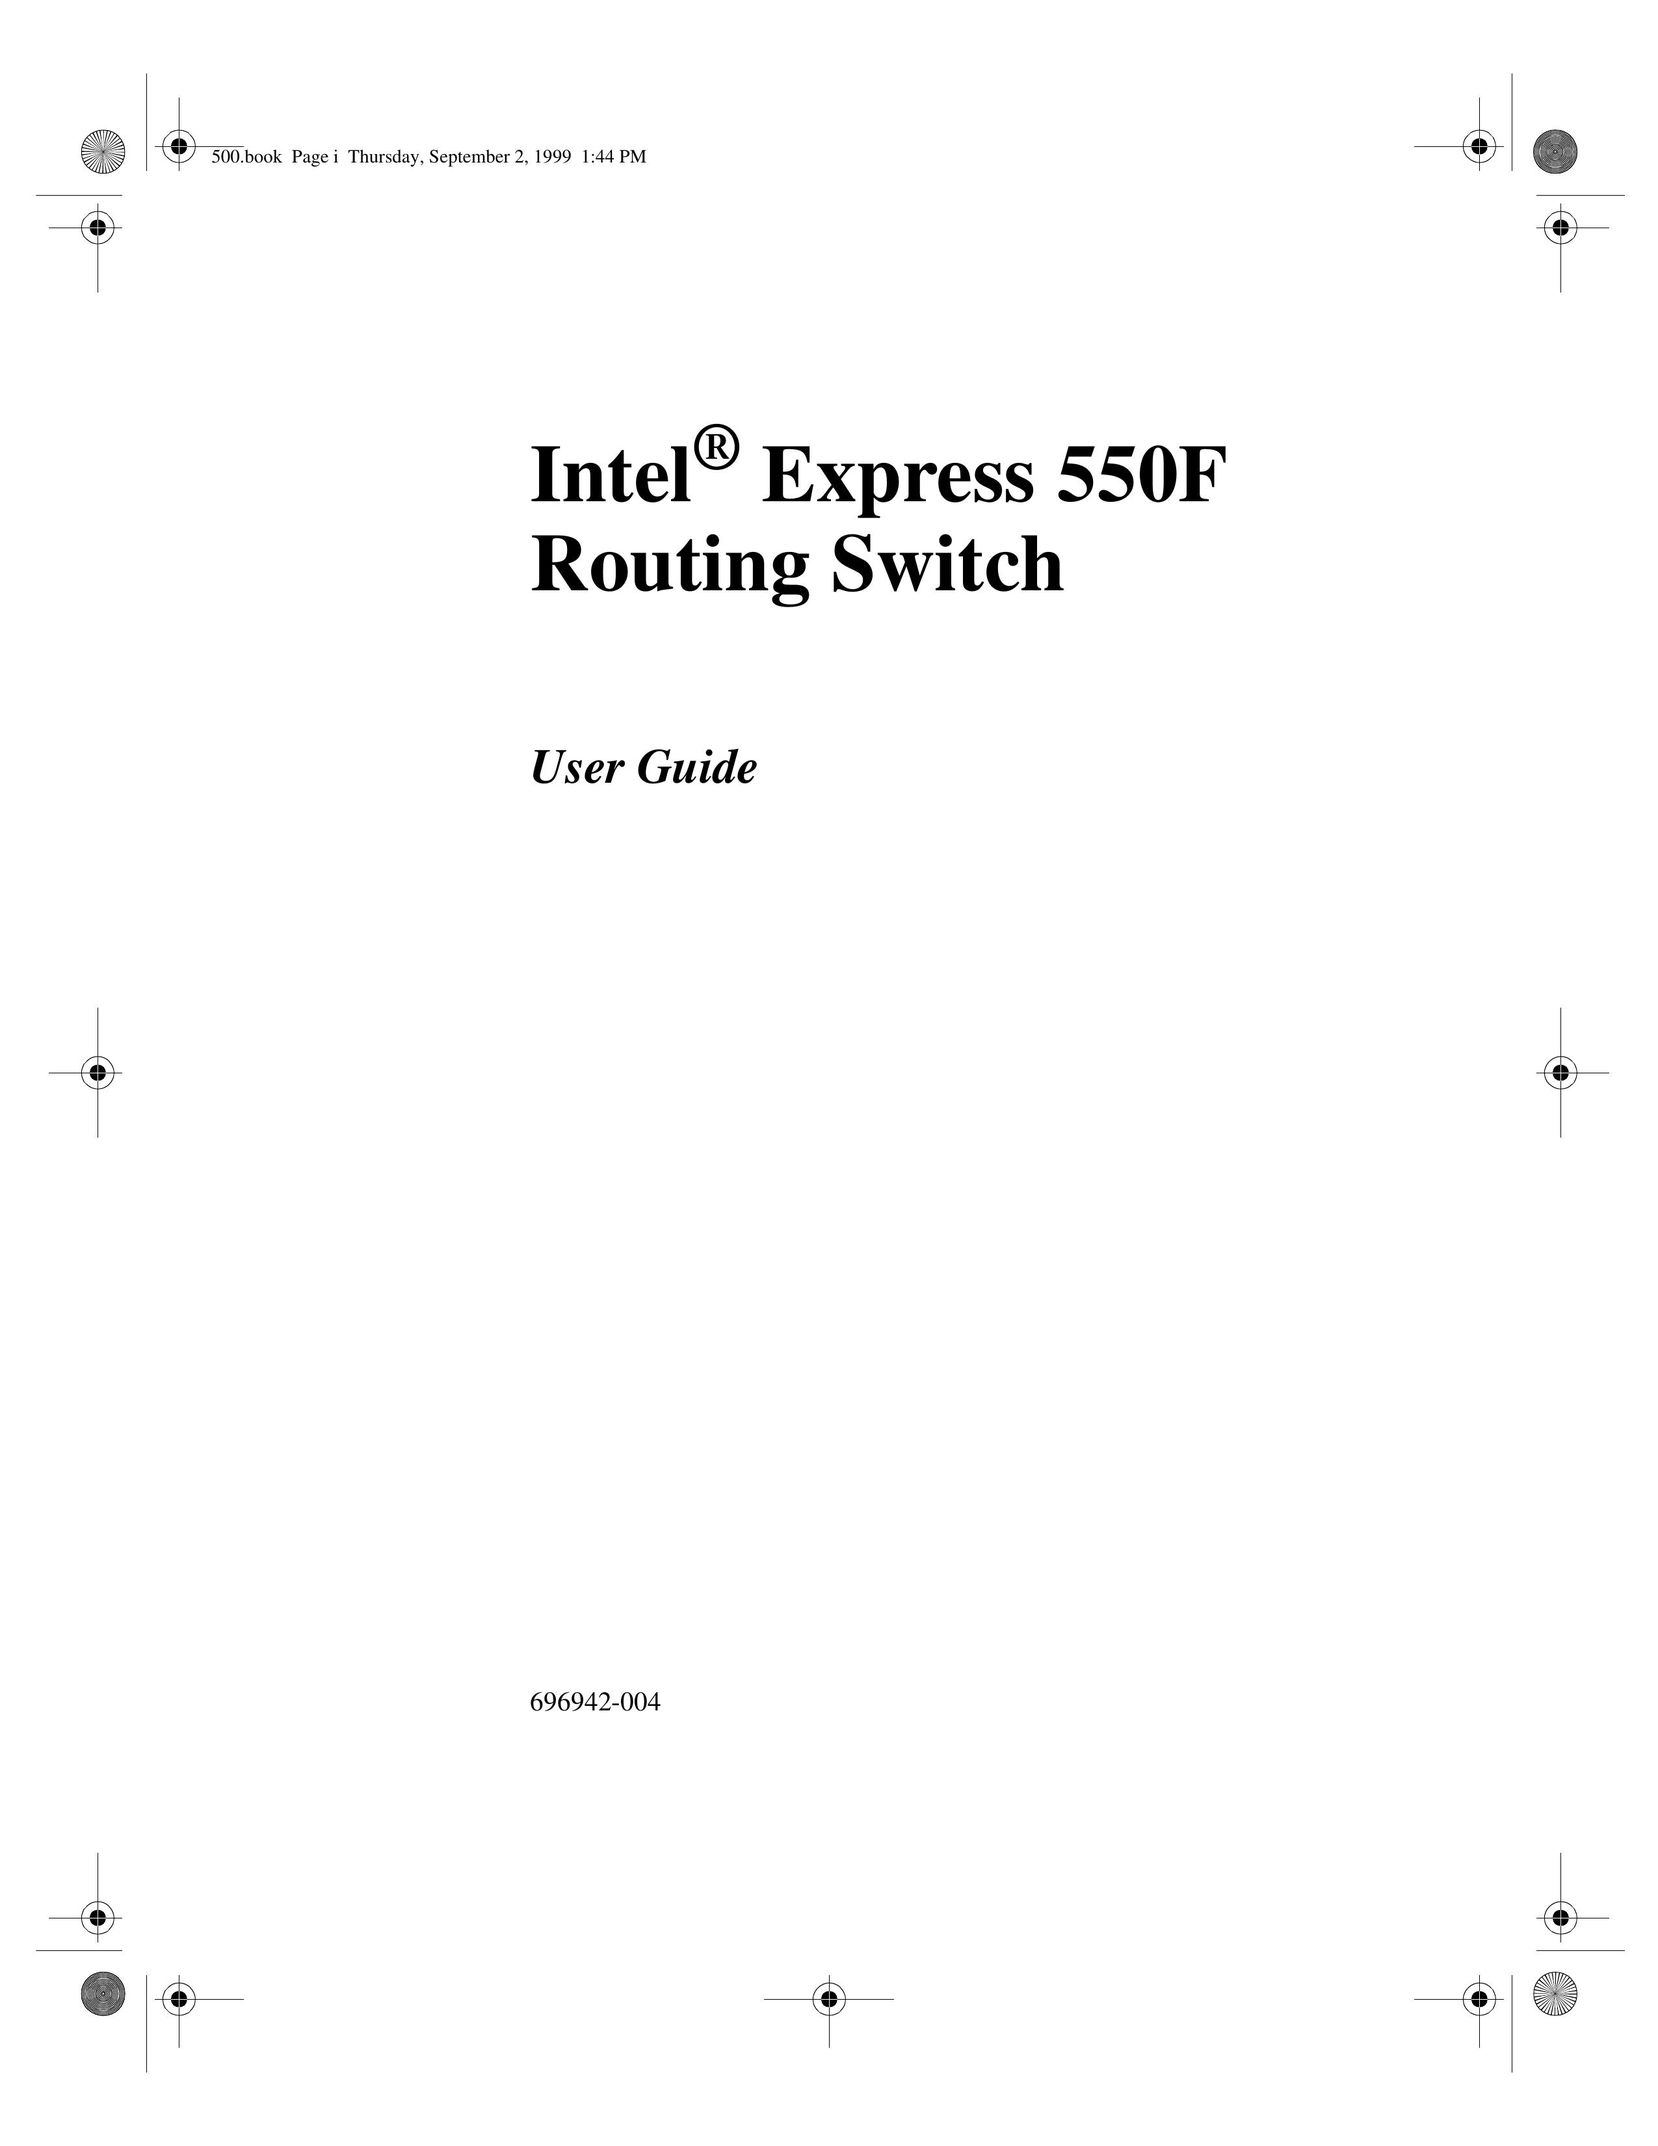 Intel 550F Saw User Manual